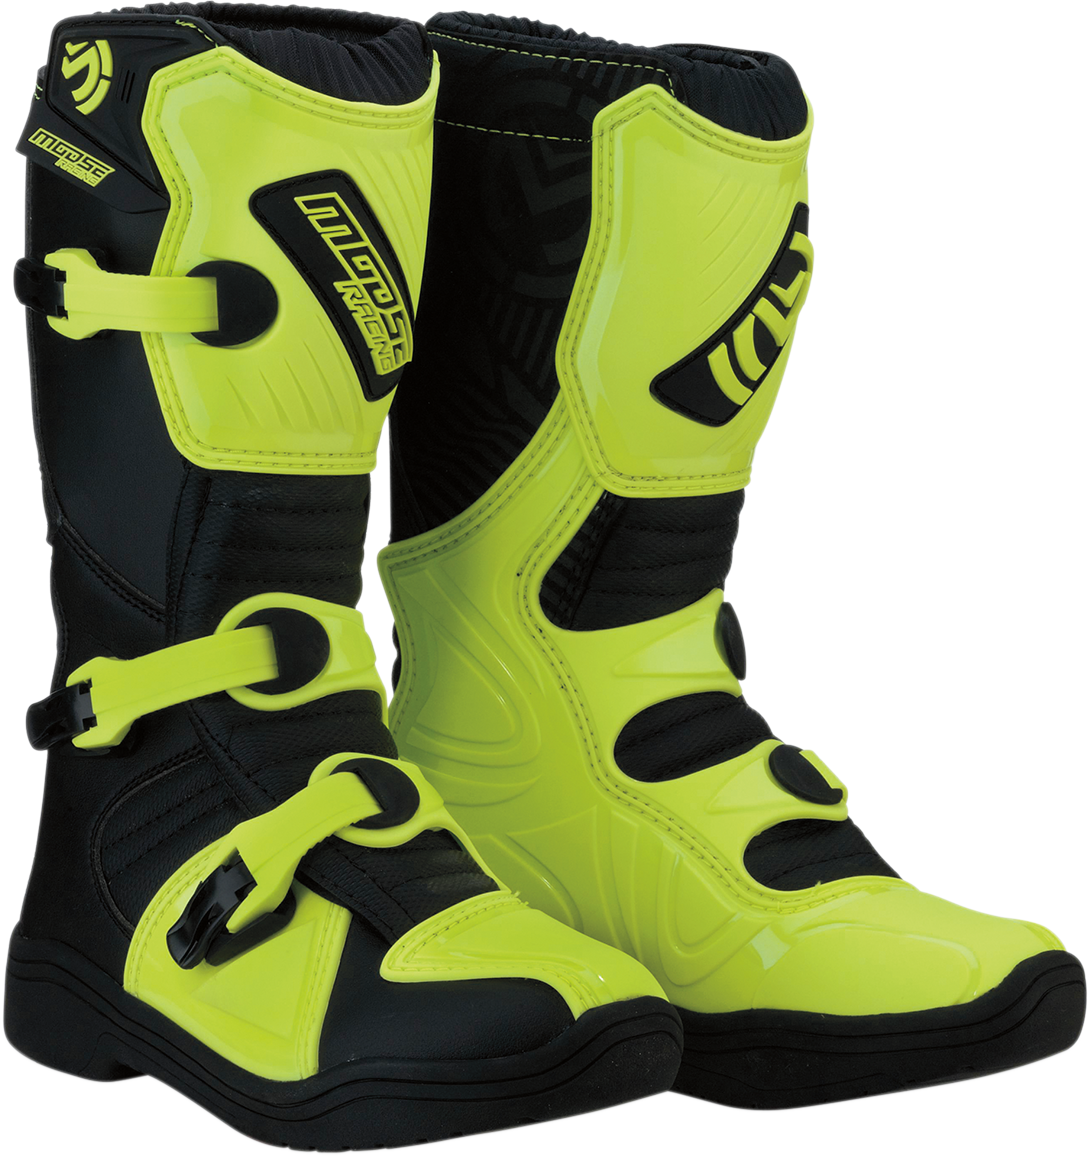 MOOSE RACING M1.3 Boots - Black/Hi-Viz Yellow - Size 2 3411-0445